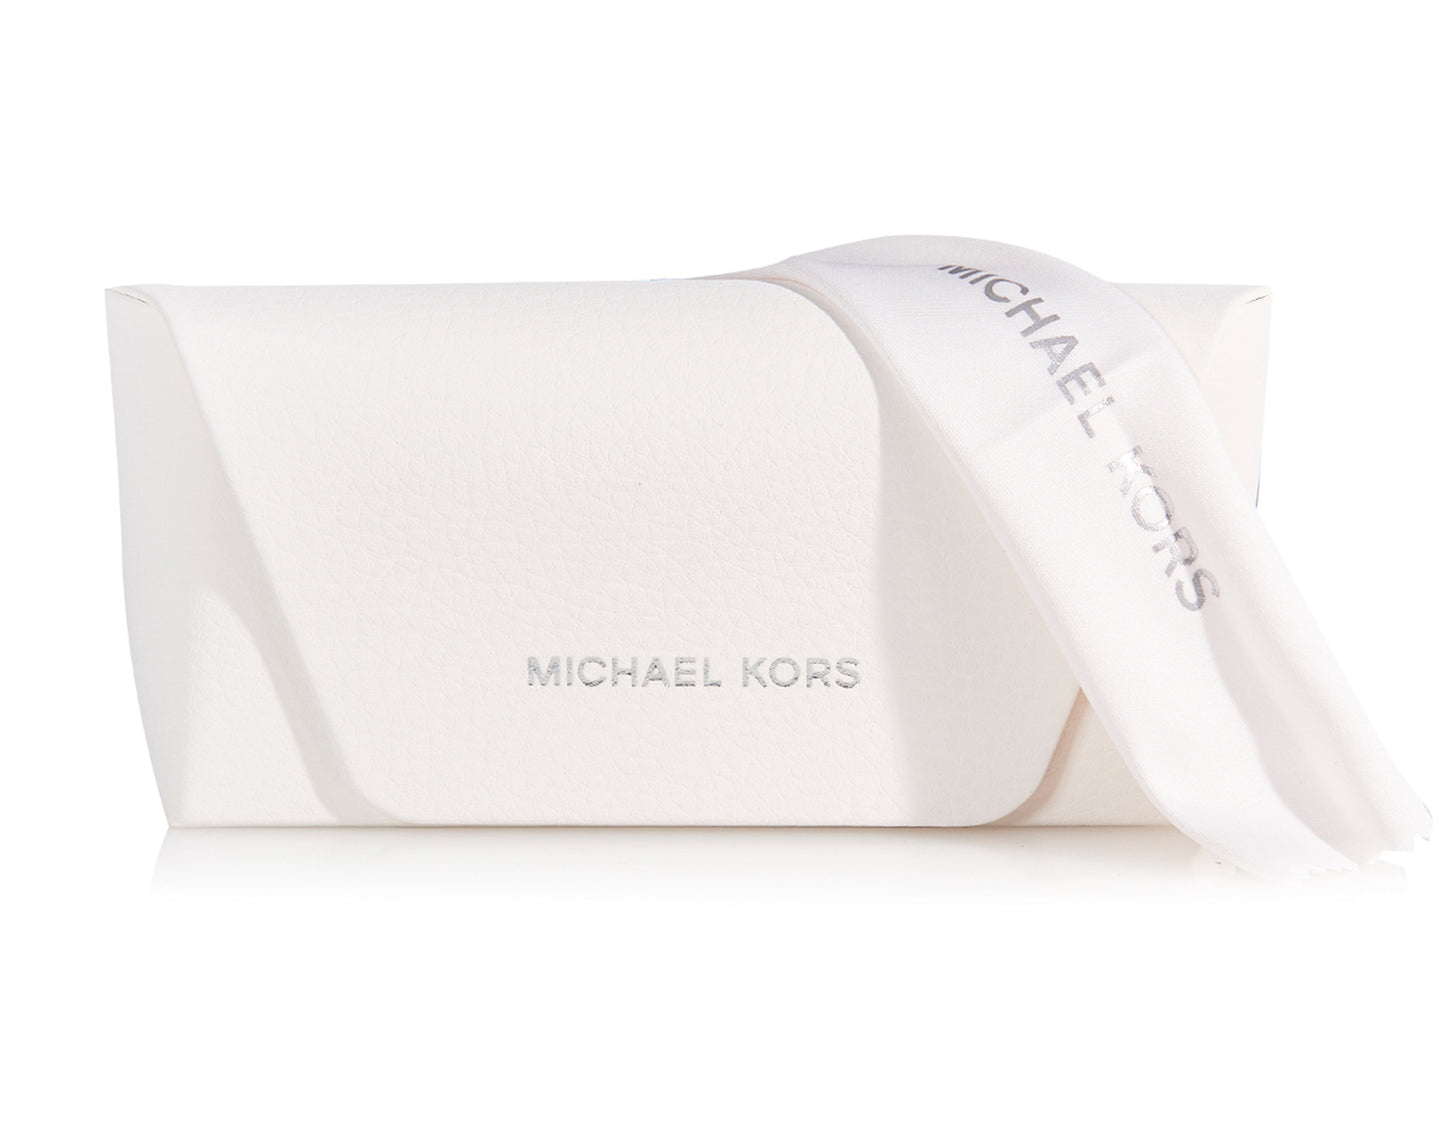 Michael Kors MK360-038 53mm